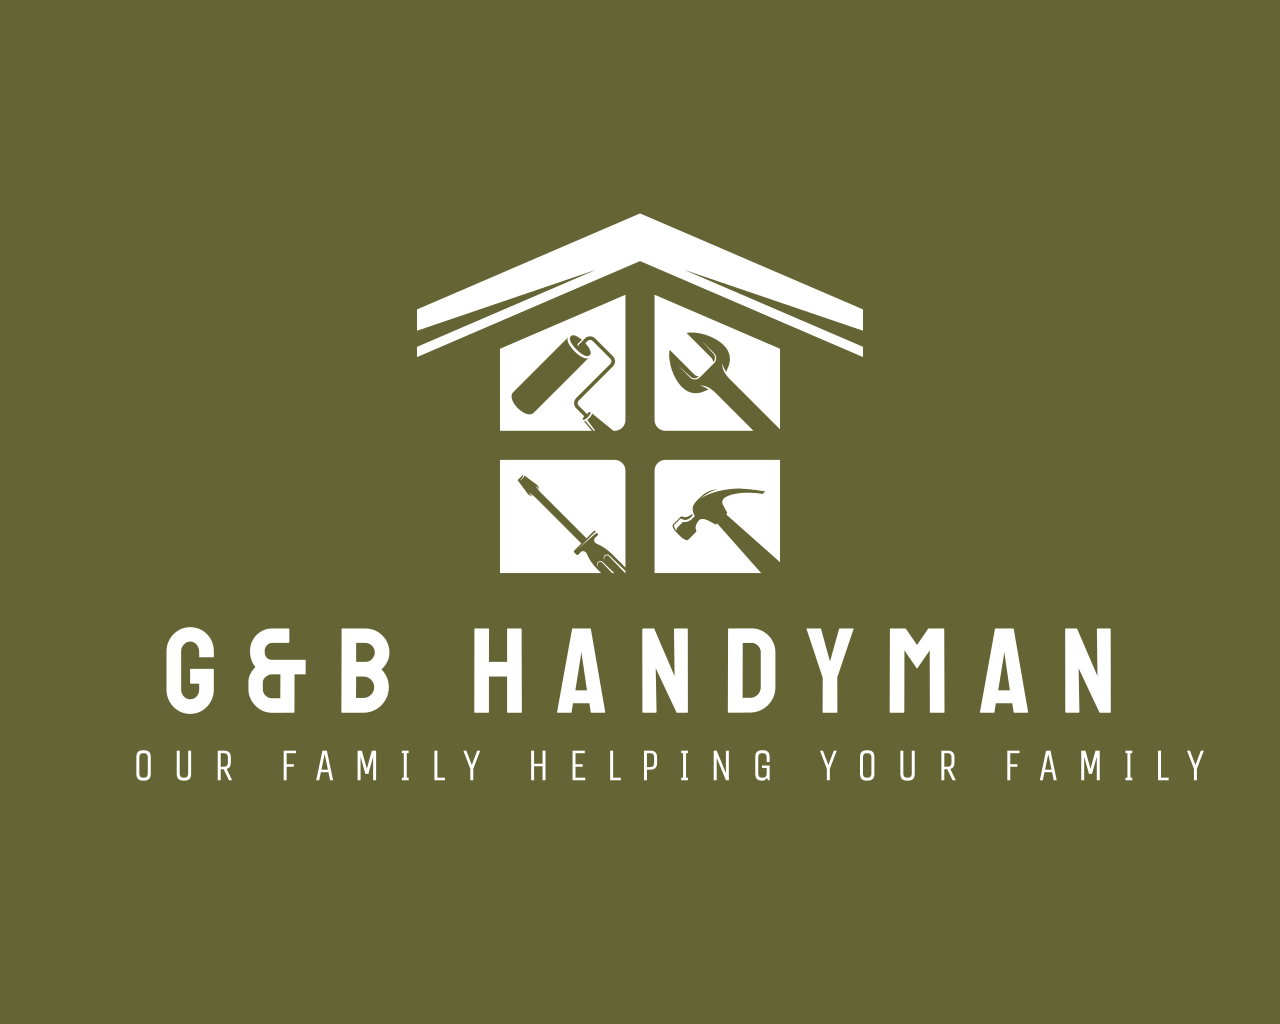 G&B Handyman